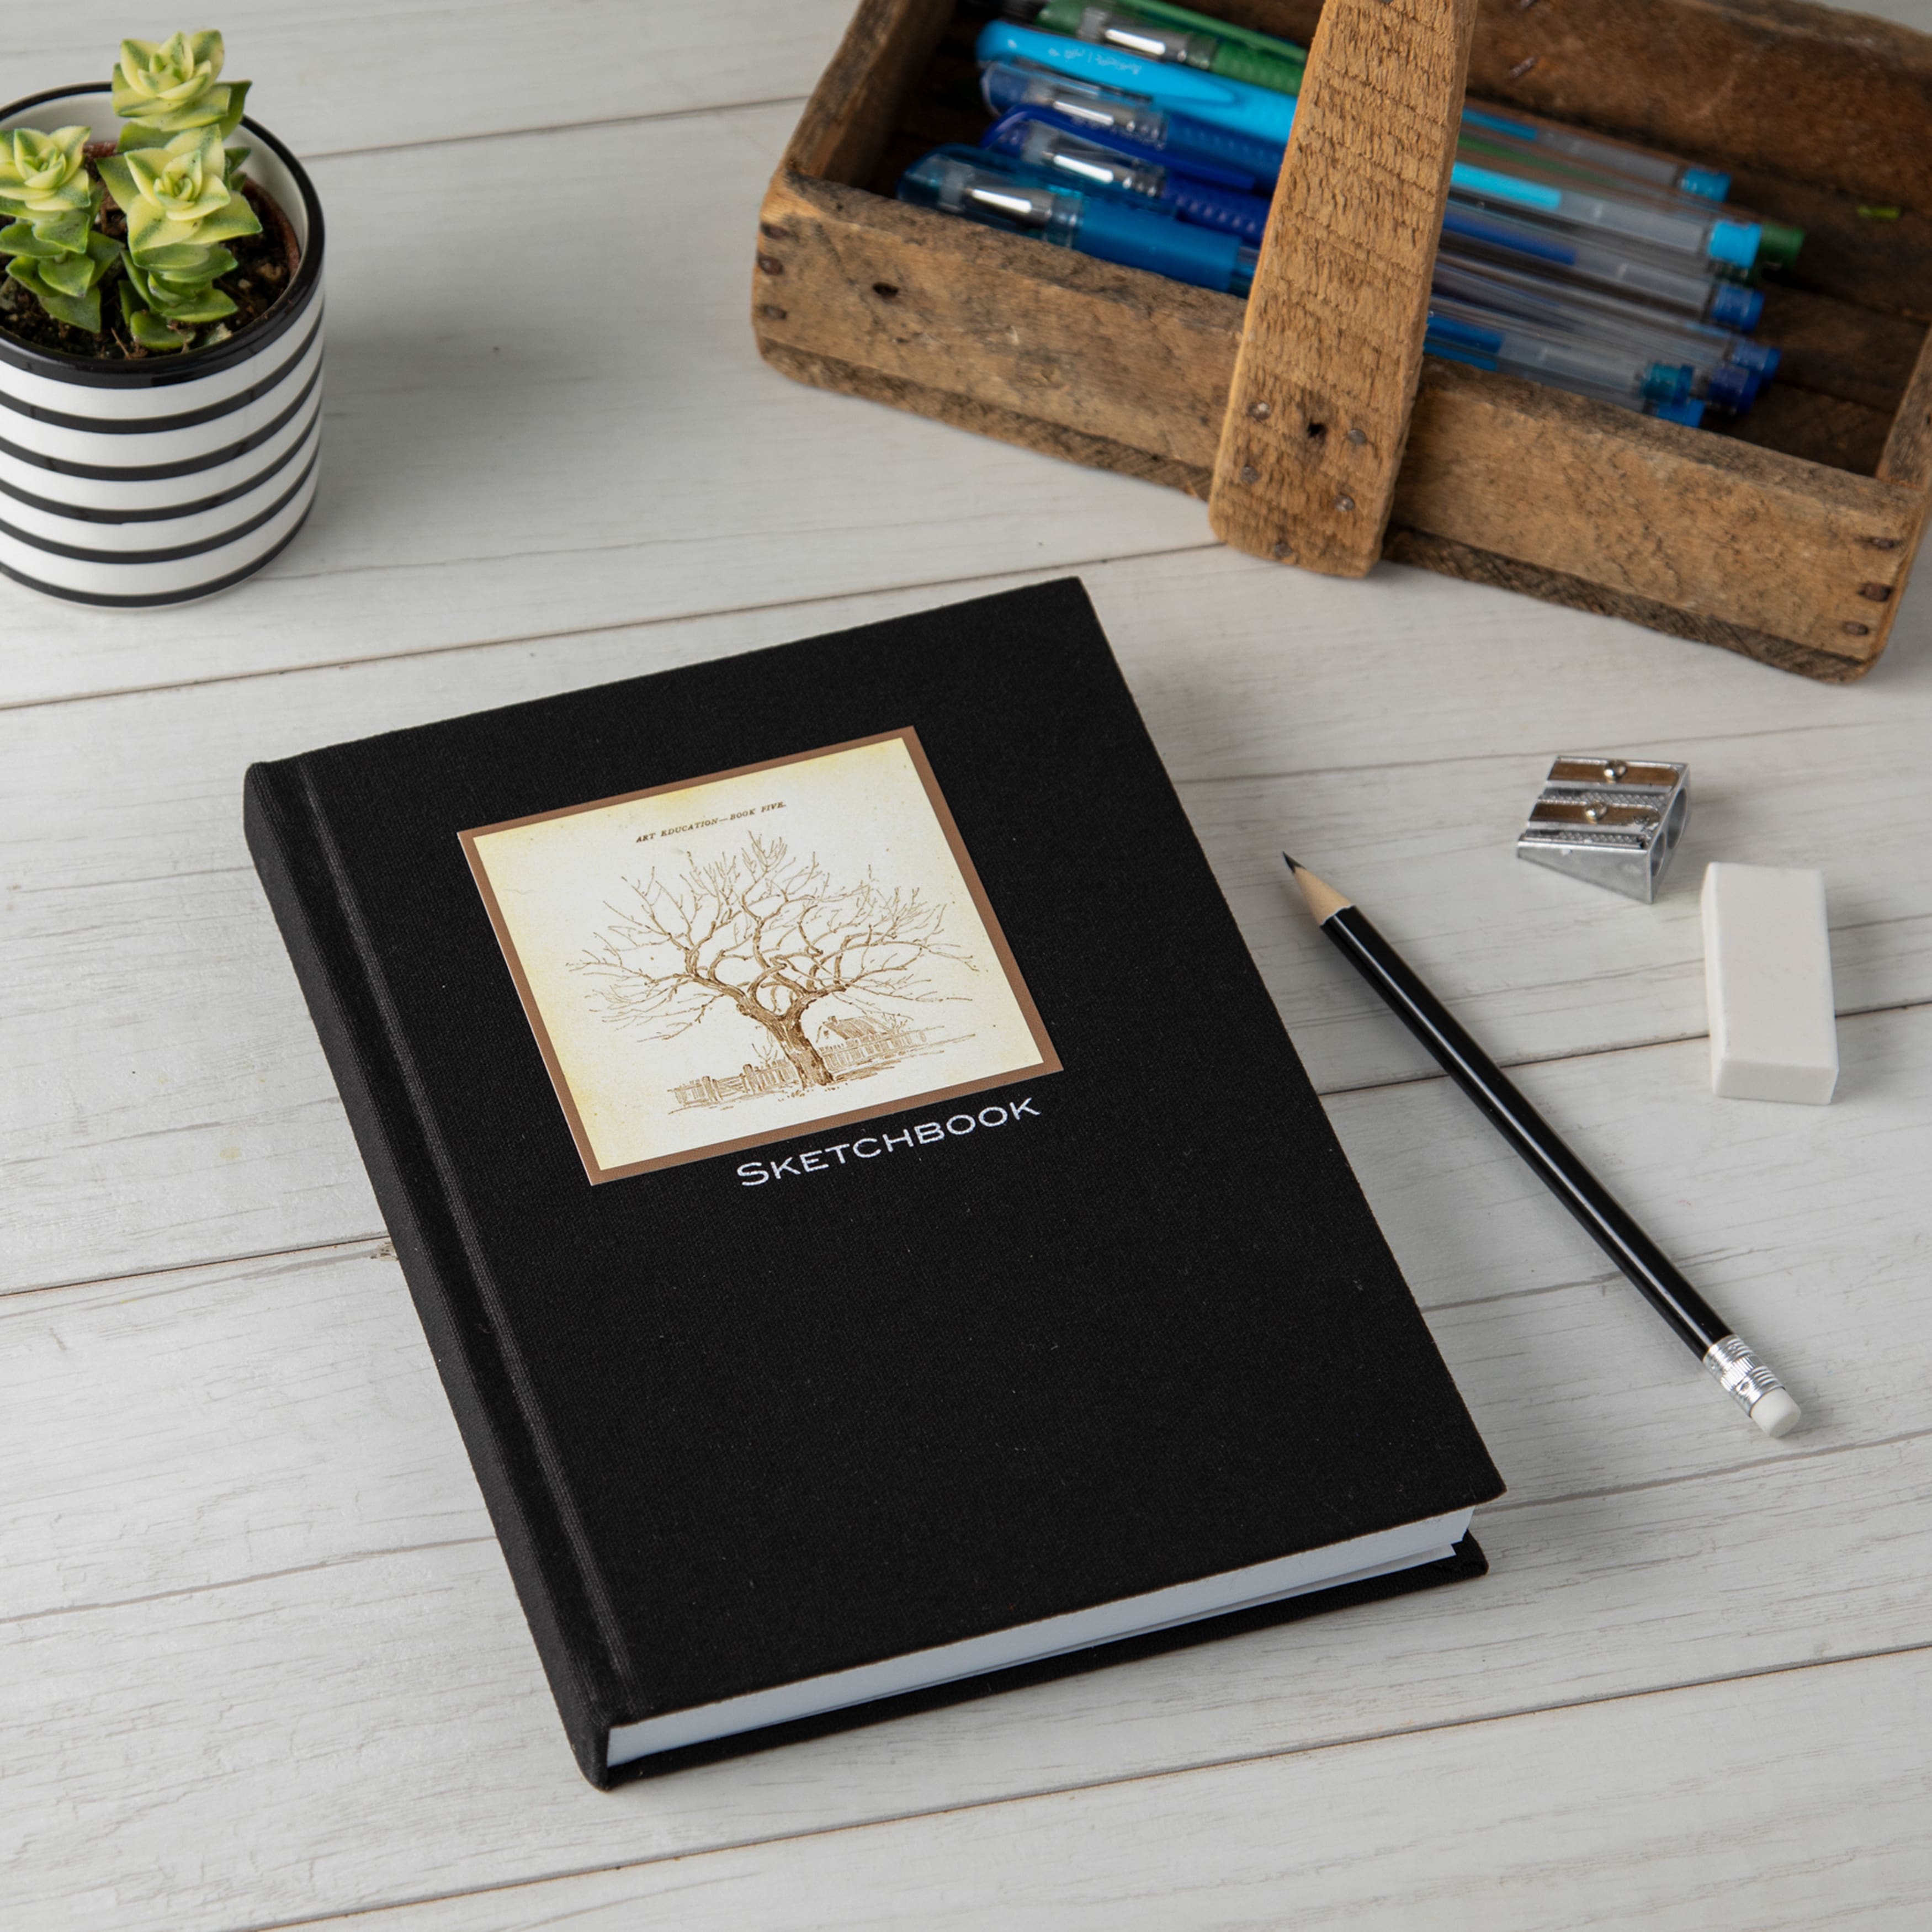 Why should I use a sketchbook? — Sara Corren